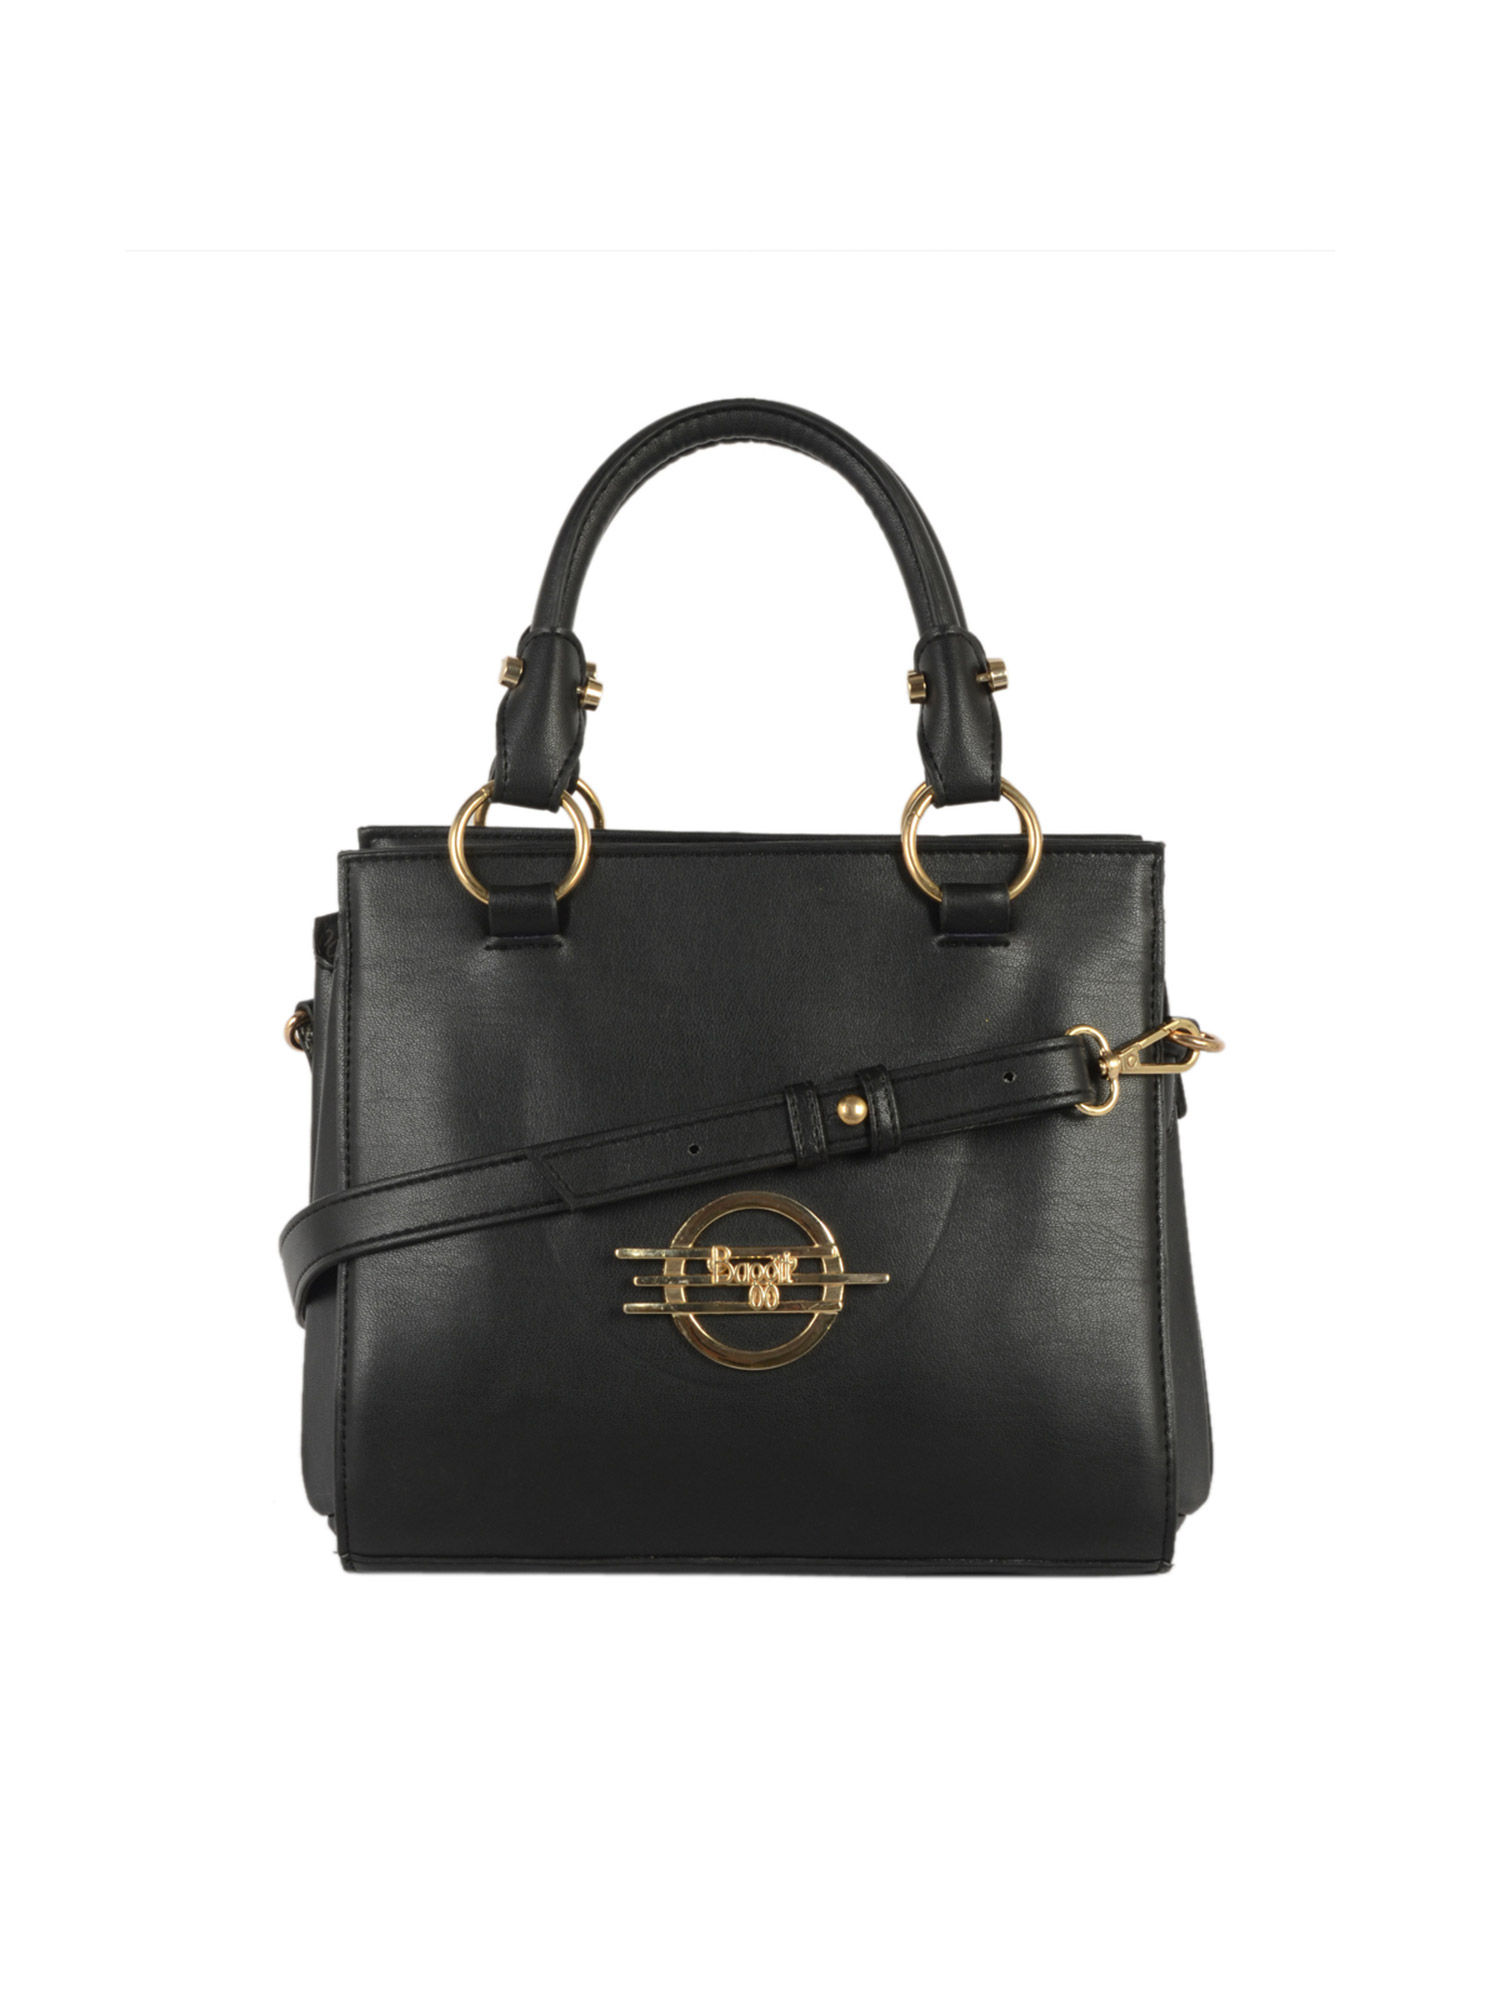 Avon Black Zip Top Bag Purse Small Satchel Hand Bag Vinyl Patent Leather  Trim | eBay